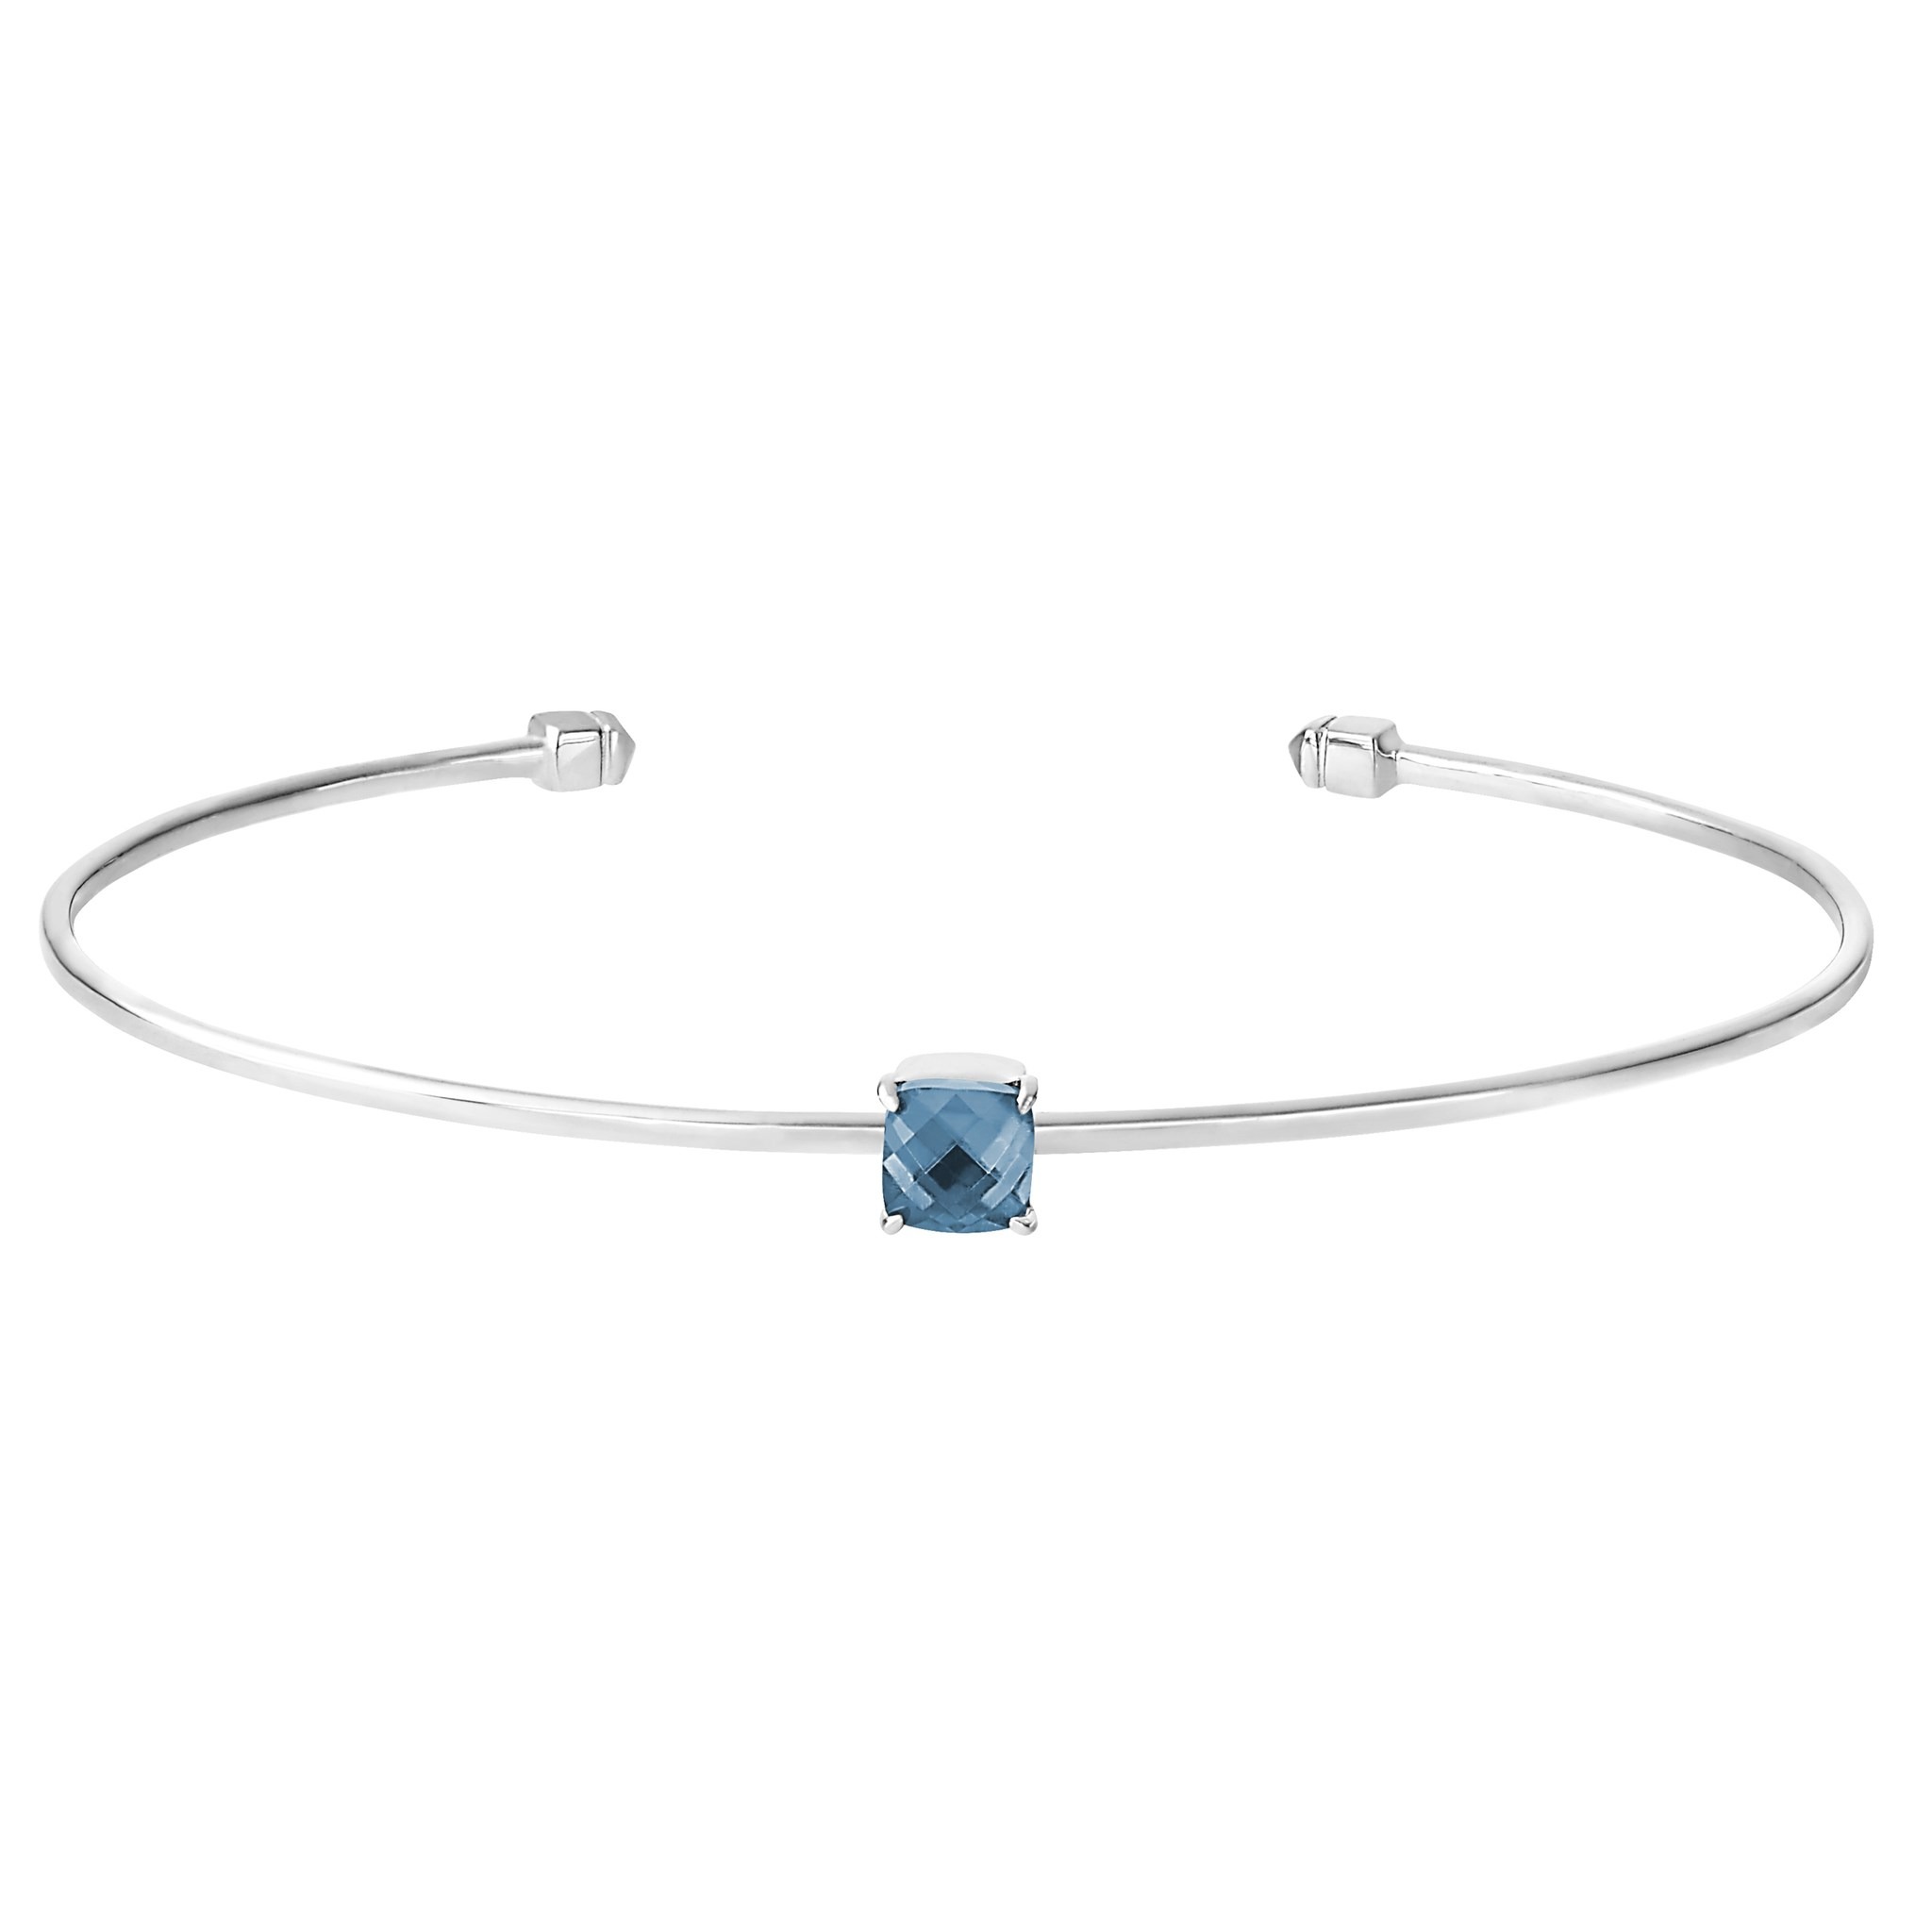 Rhodium Finish Sterling Silver Pliable Cuff Bracelet with Faceted Cushion Cut Simulated Aqua Marine Birth Gem - March